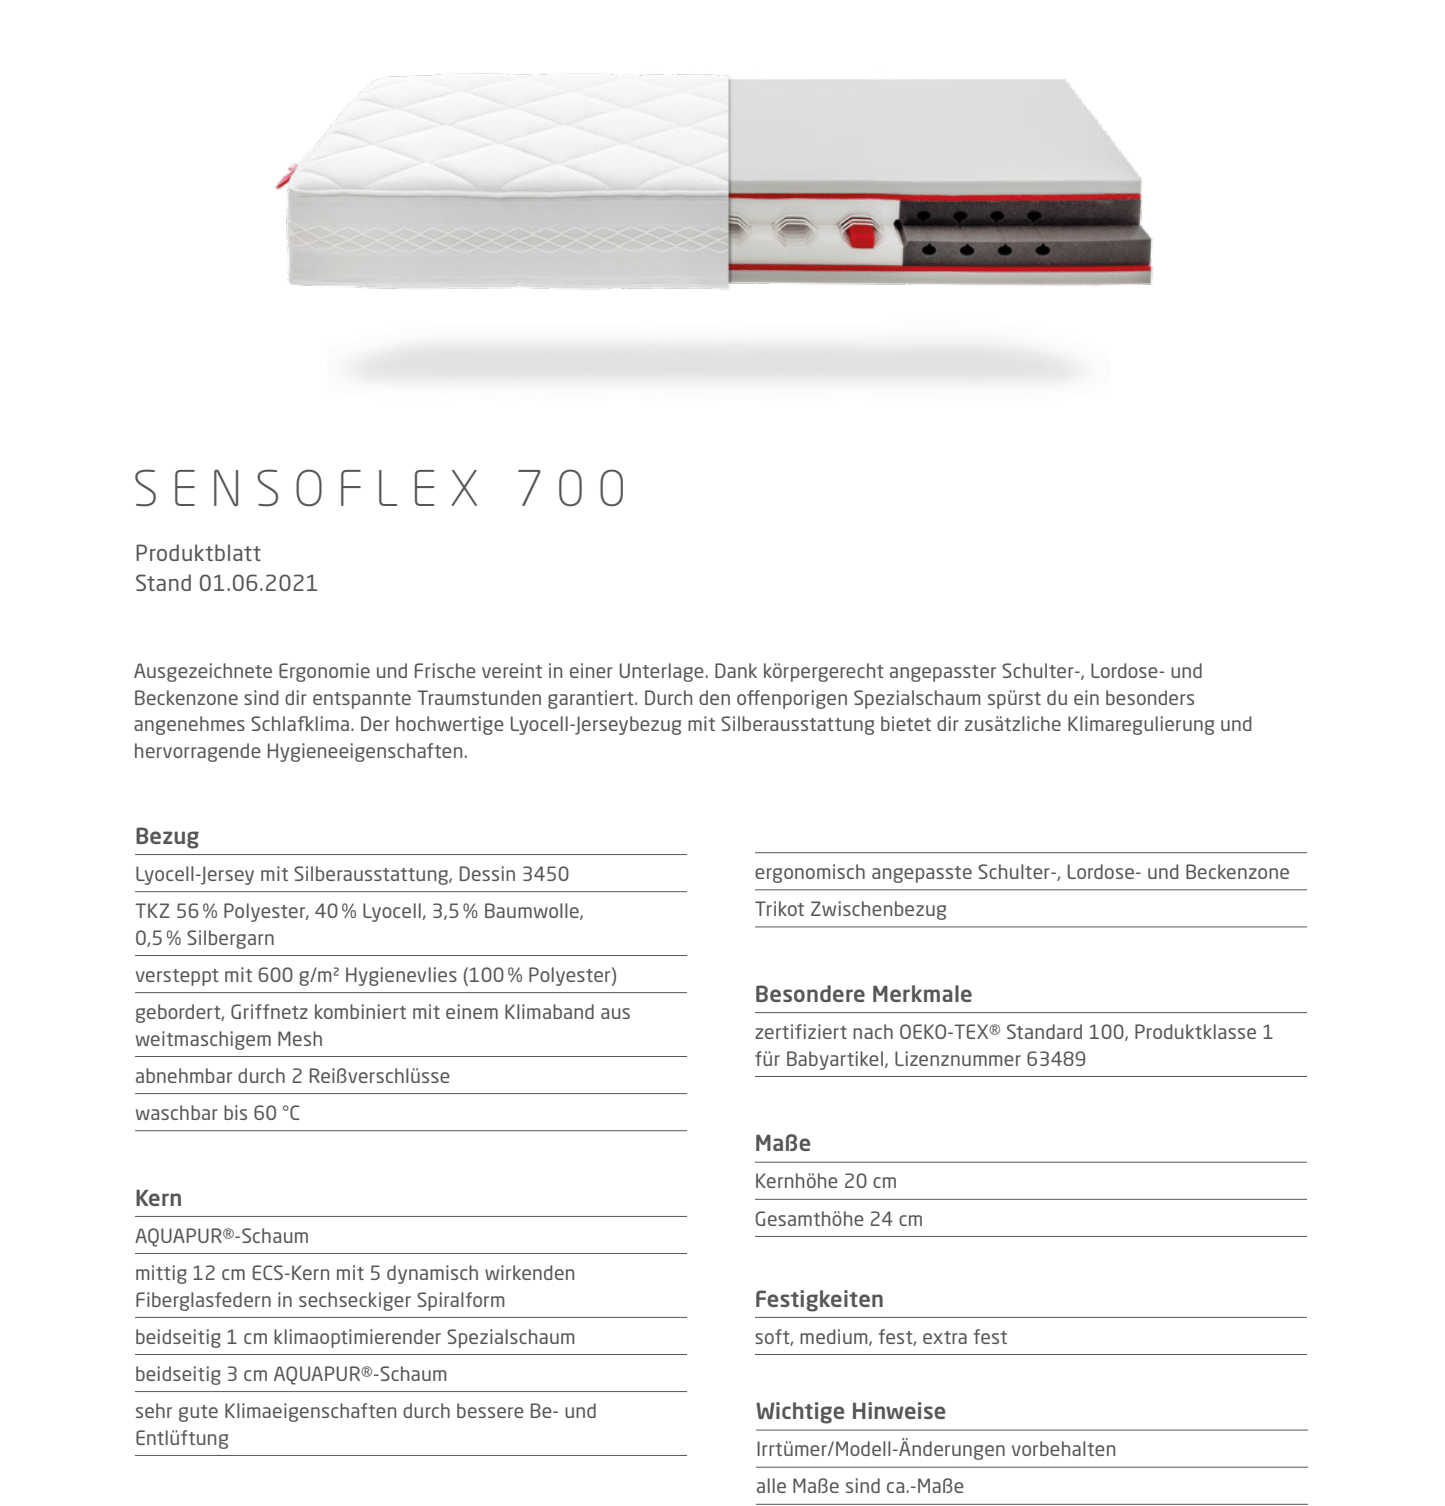 Sensoflex 700